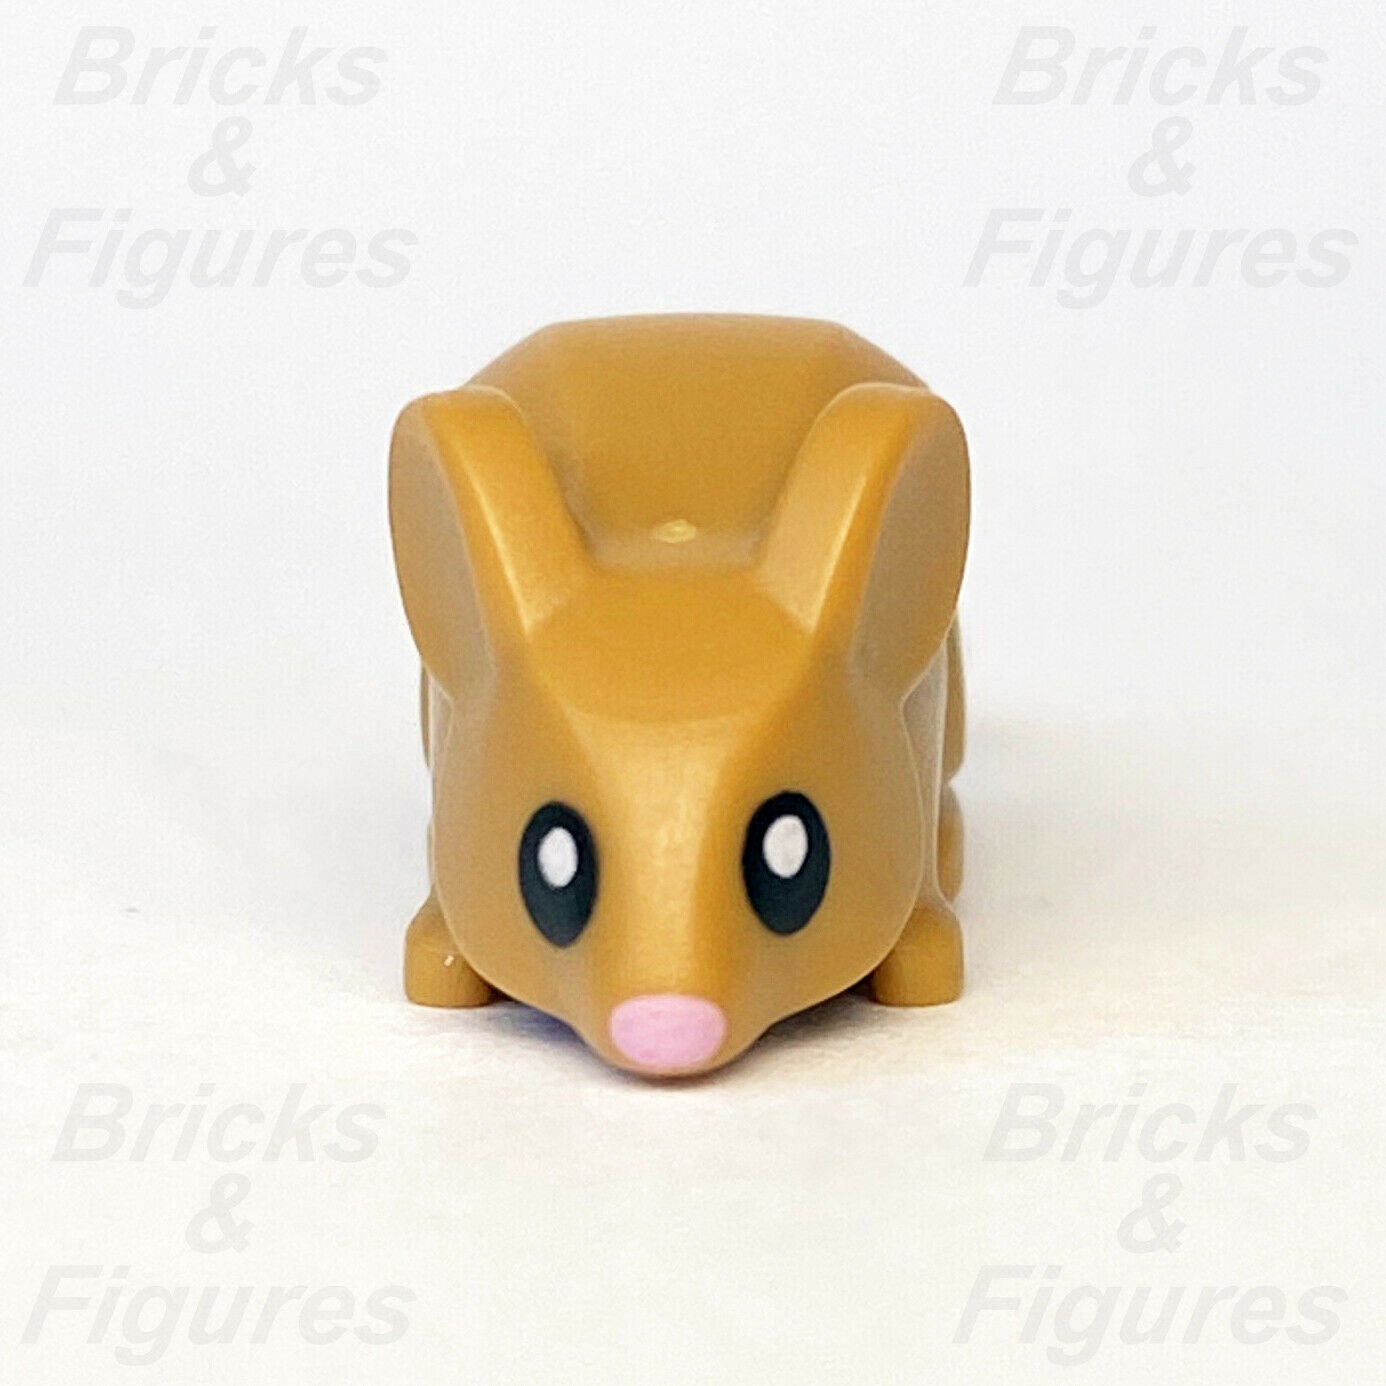 Collectible Minifigures LEGO Mouse / Rat Pink Nose Series 18 Animal Part 71021 - Bricks & Figures